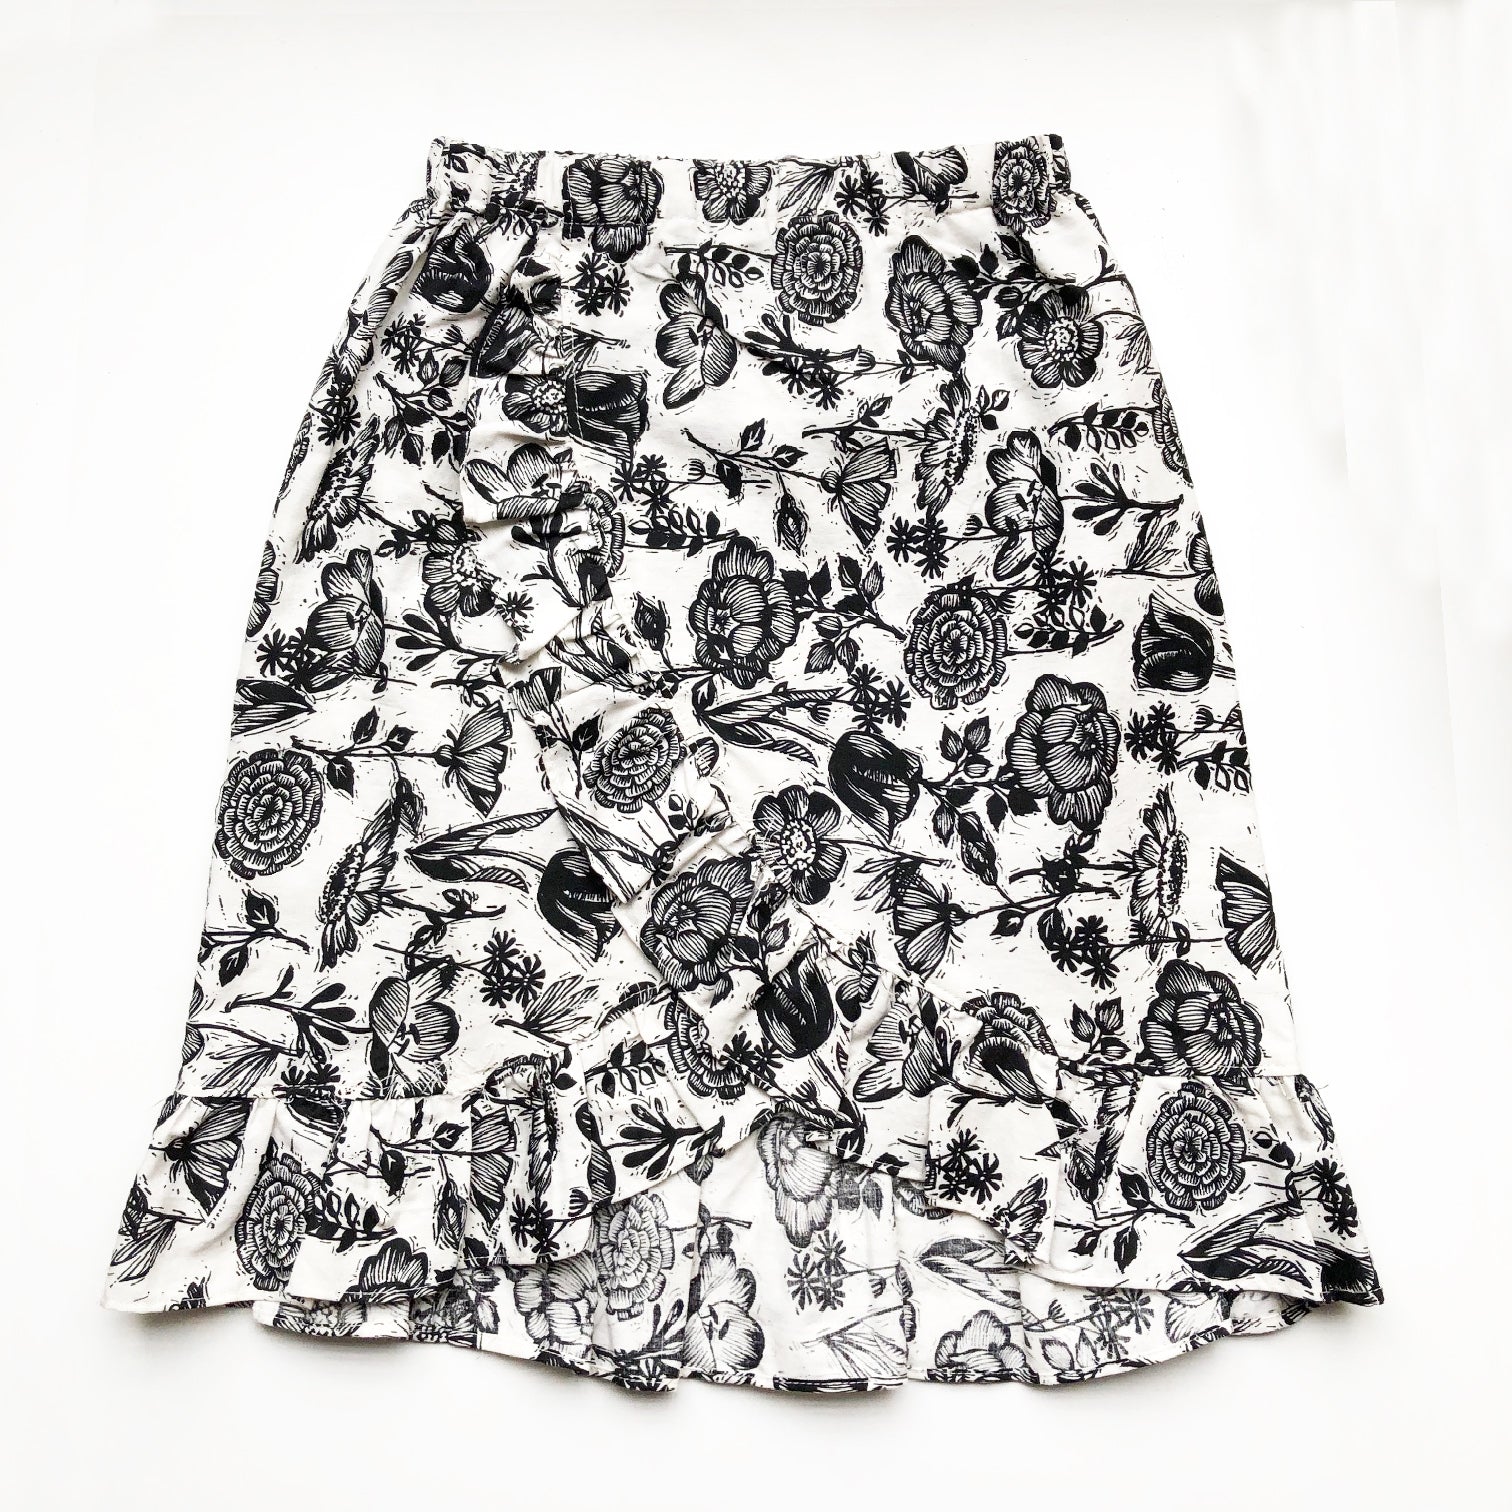 Sara Re-imagined Ruffle Skirt In B+W Botanical print size 8